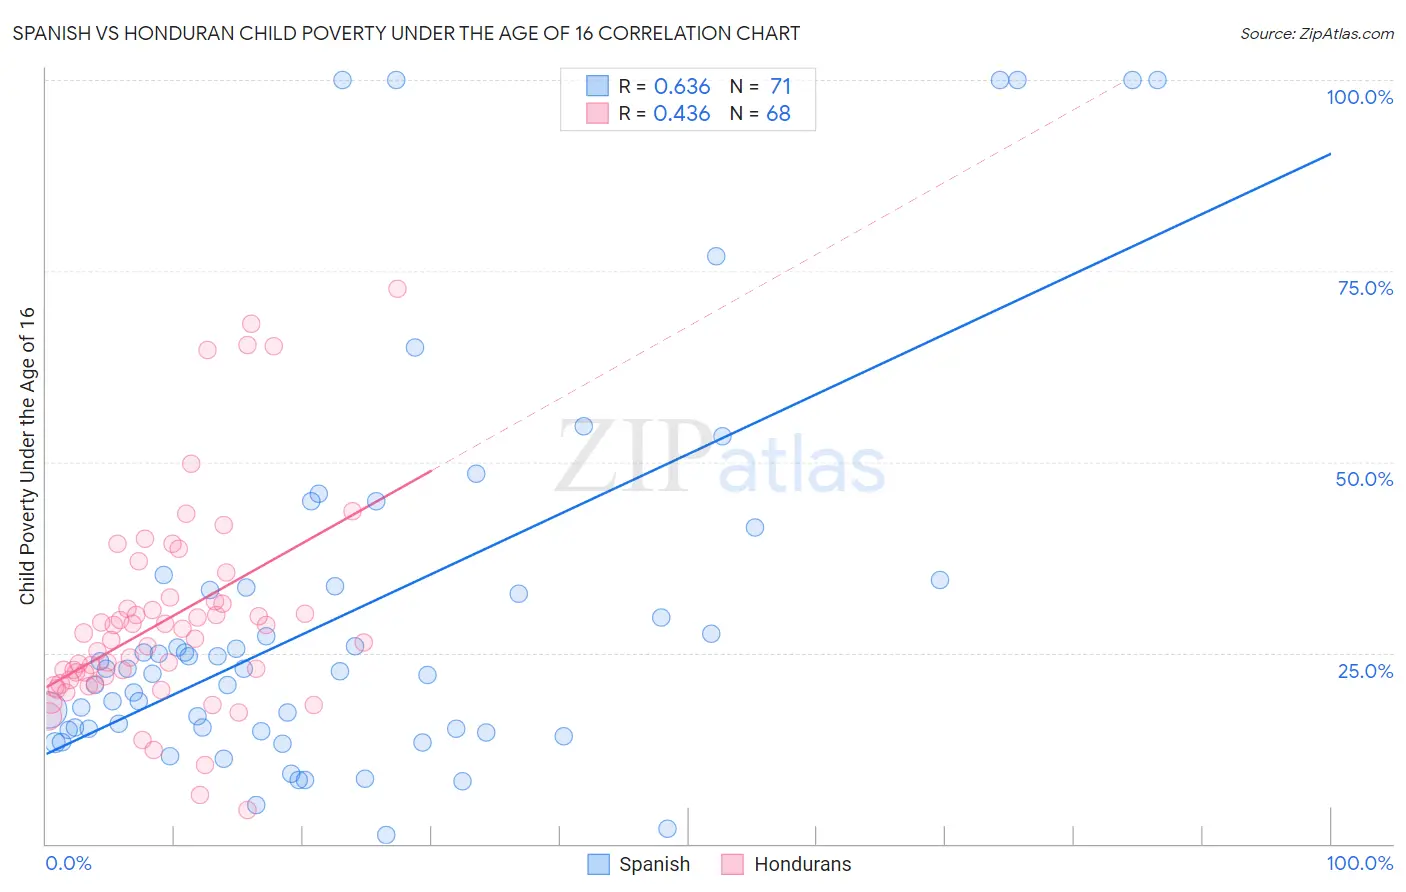 Spanish vs Honduran Child Poverty Under the Age of 16